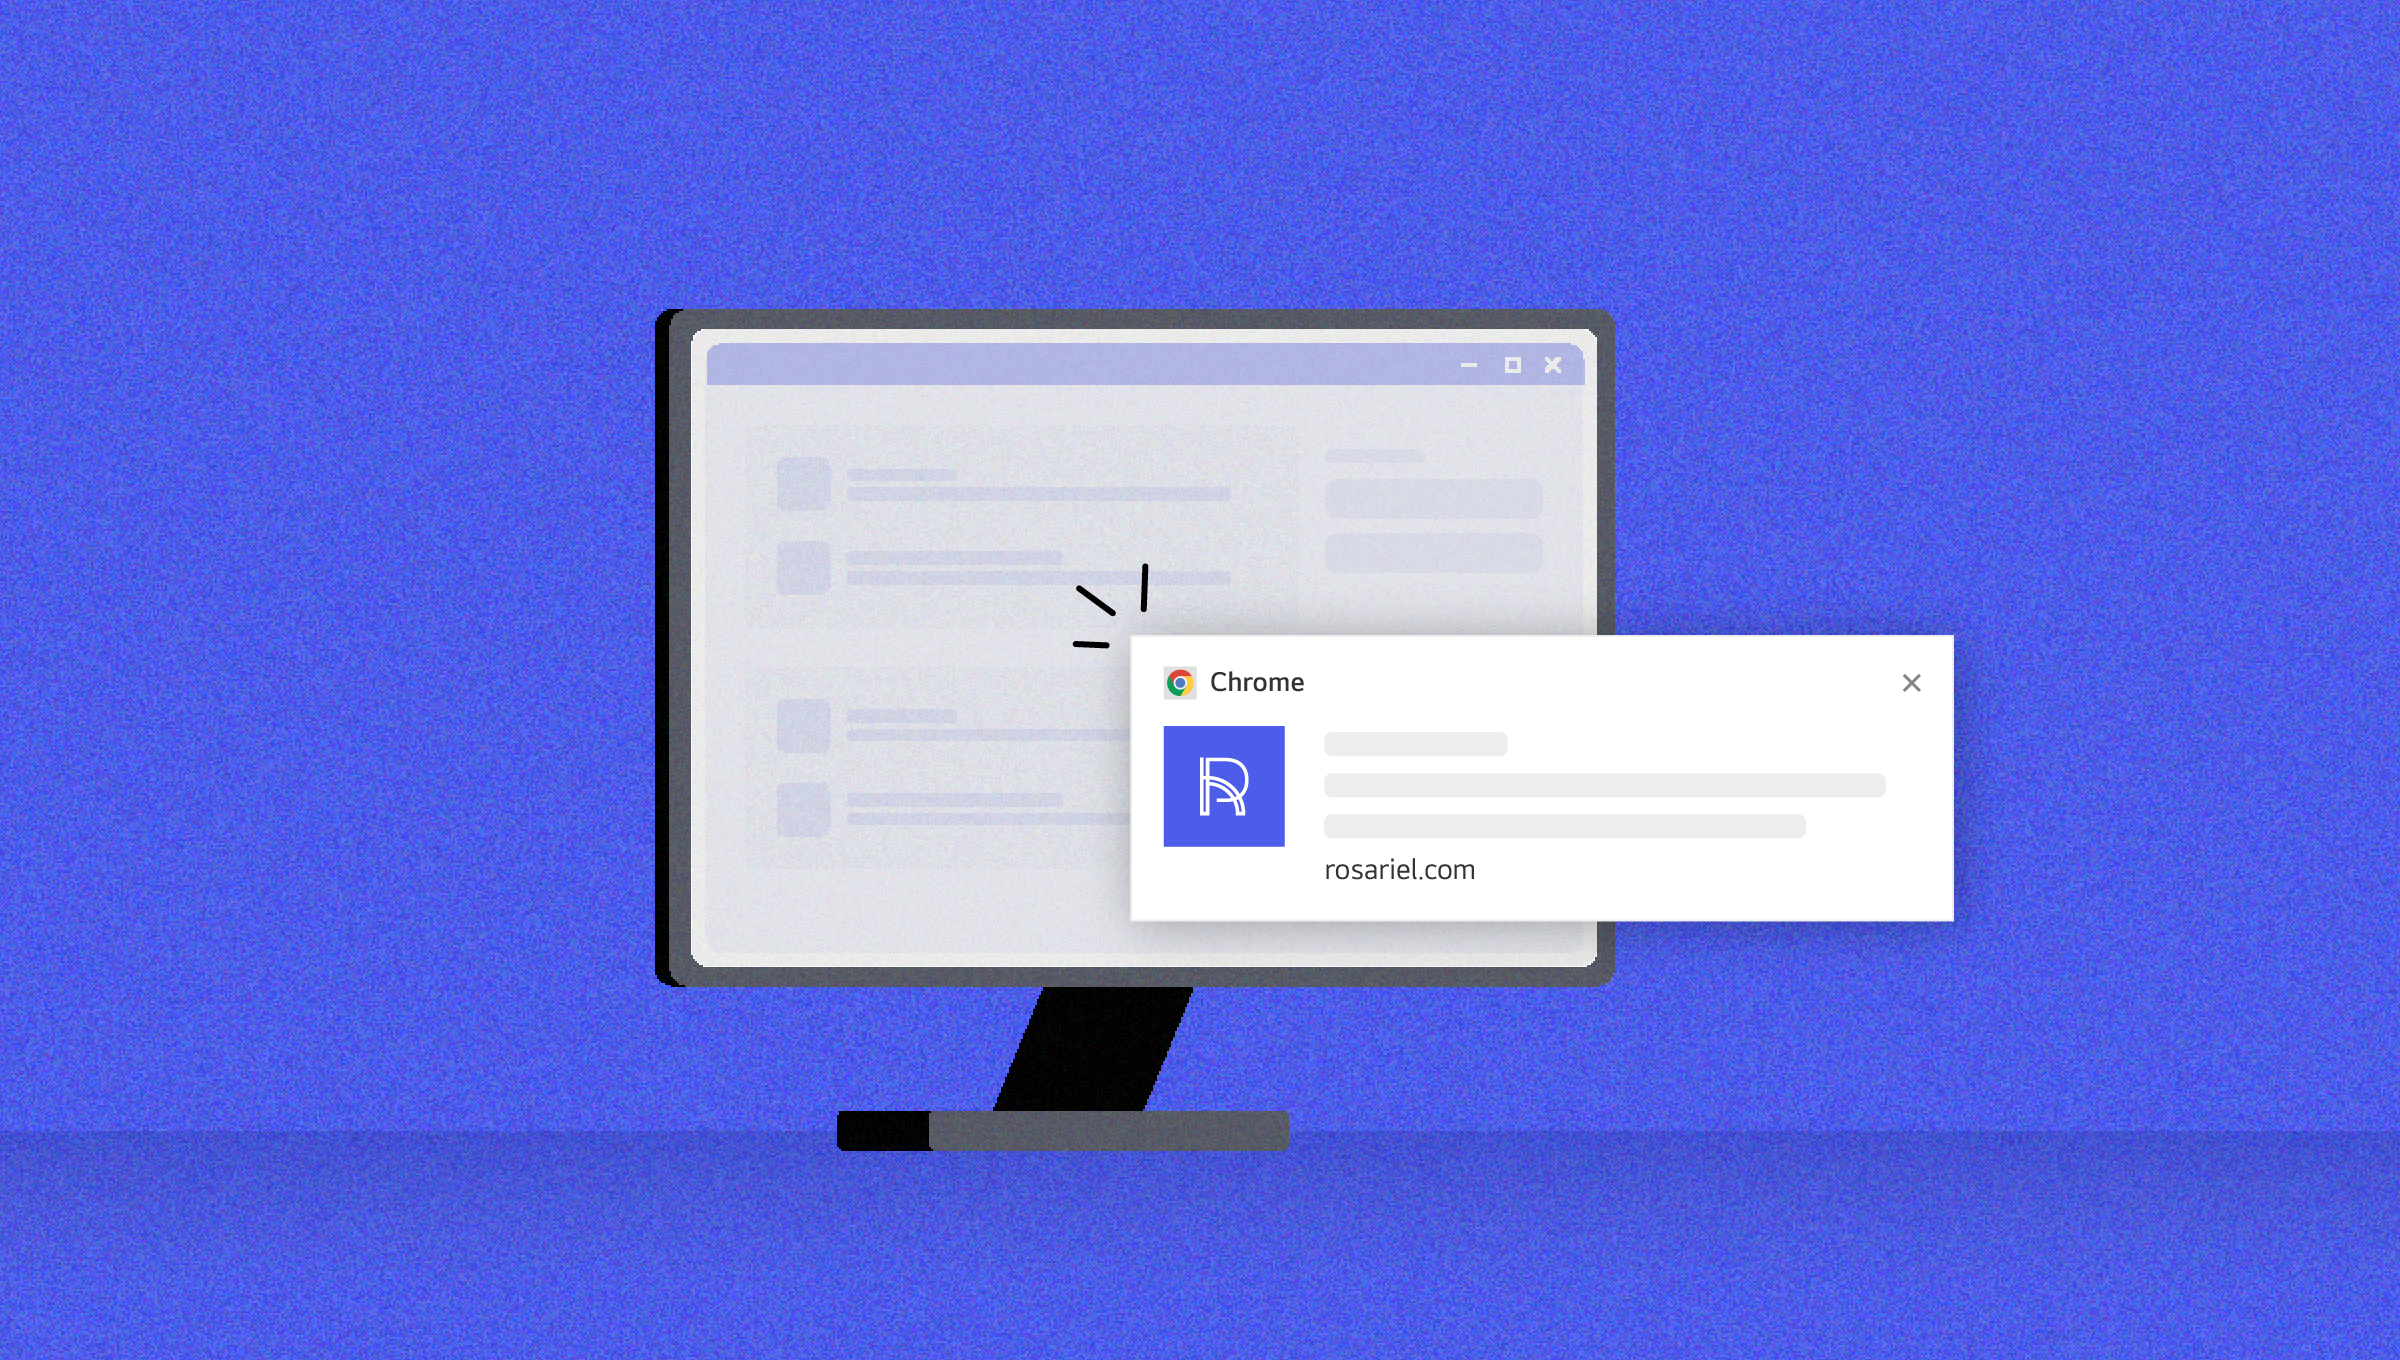 An image showing Chrome web push notification on the desktop